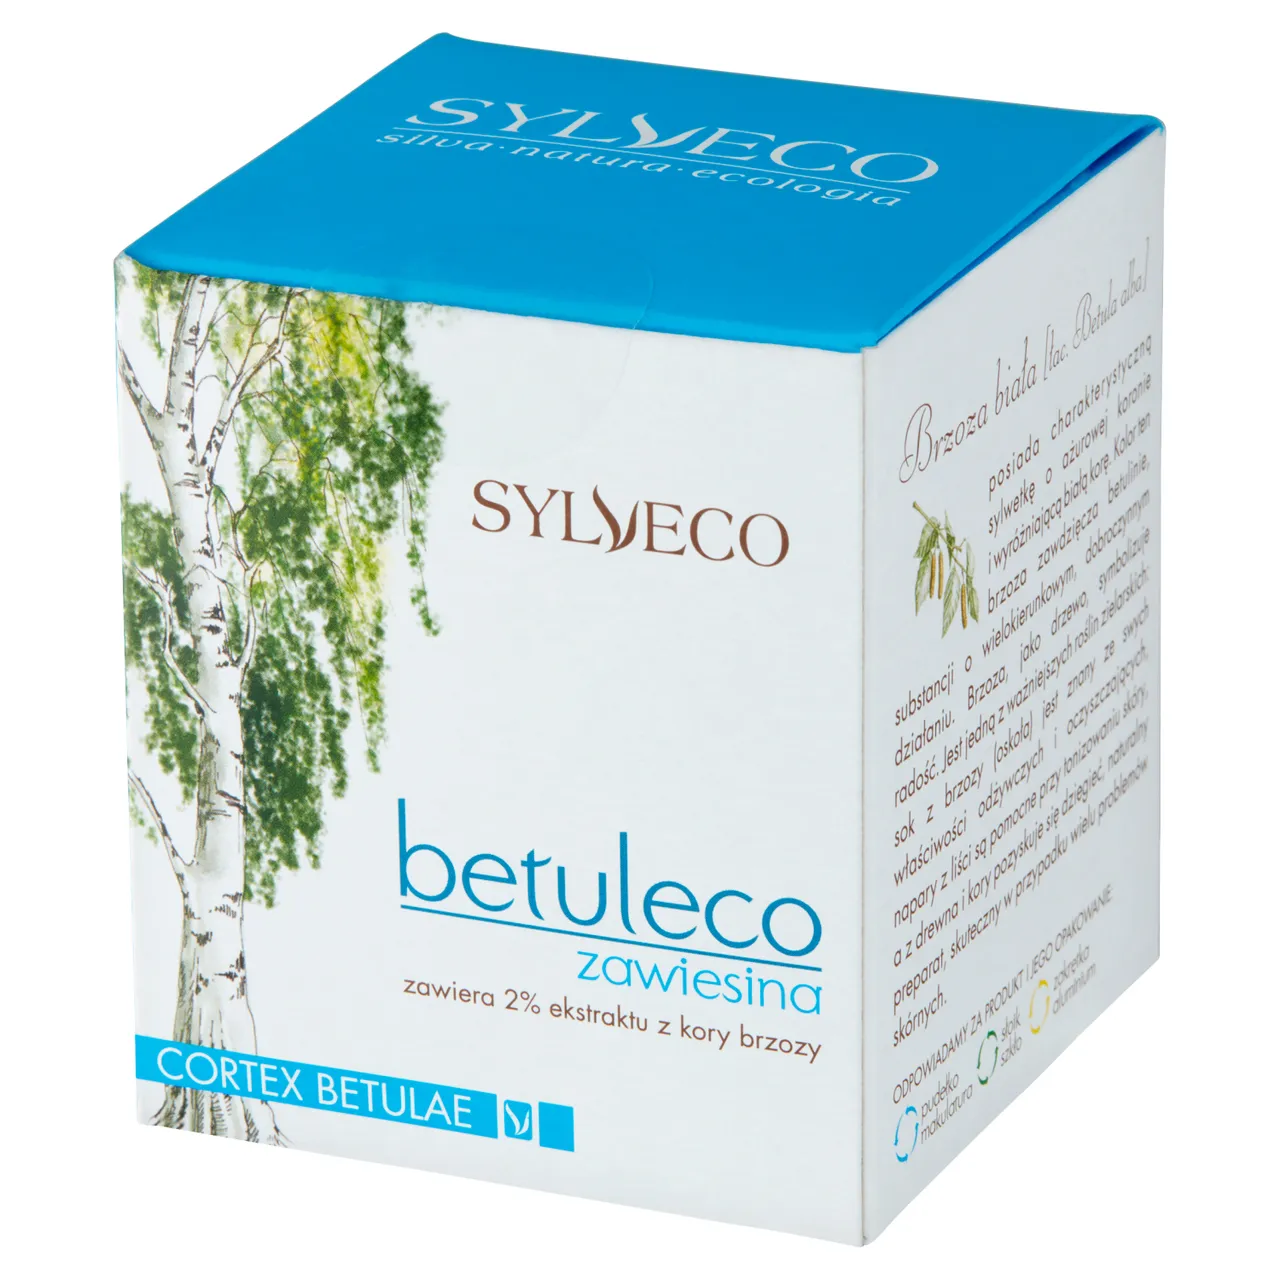 Sylveco Betuleco, zawiesina, 110 ml